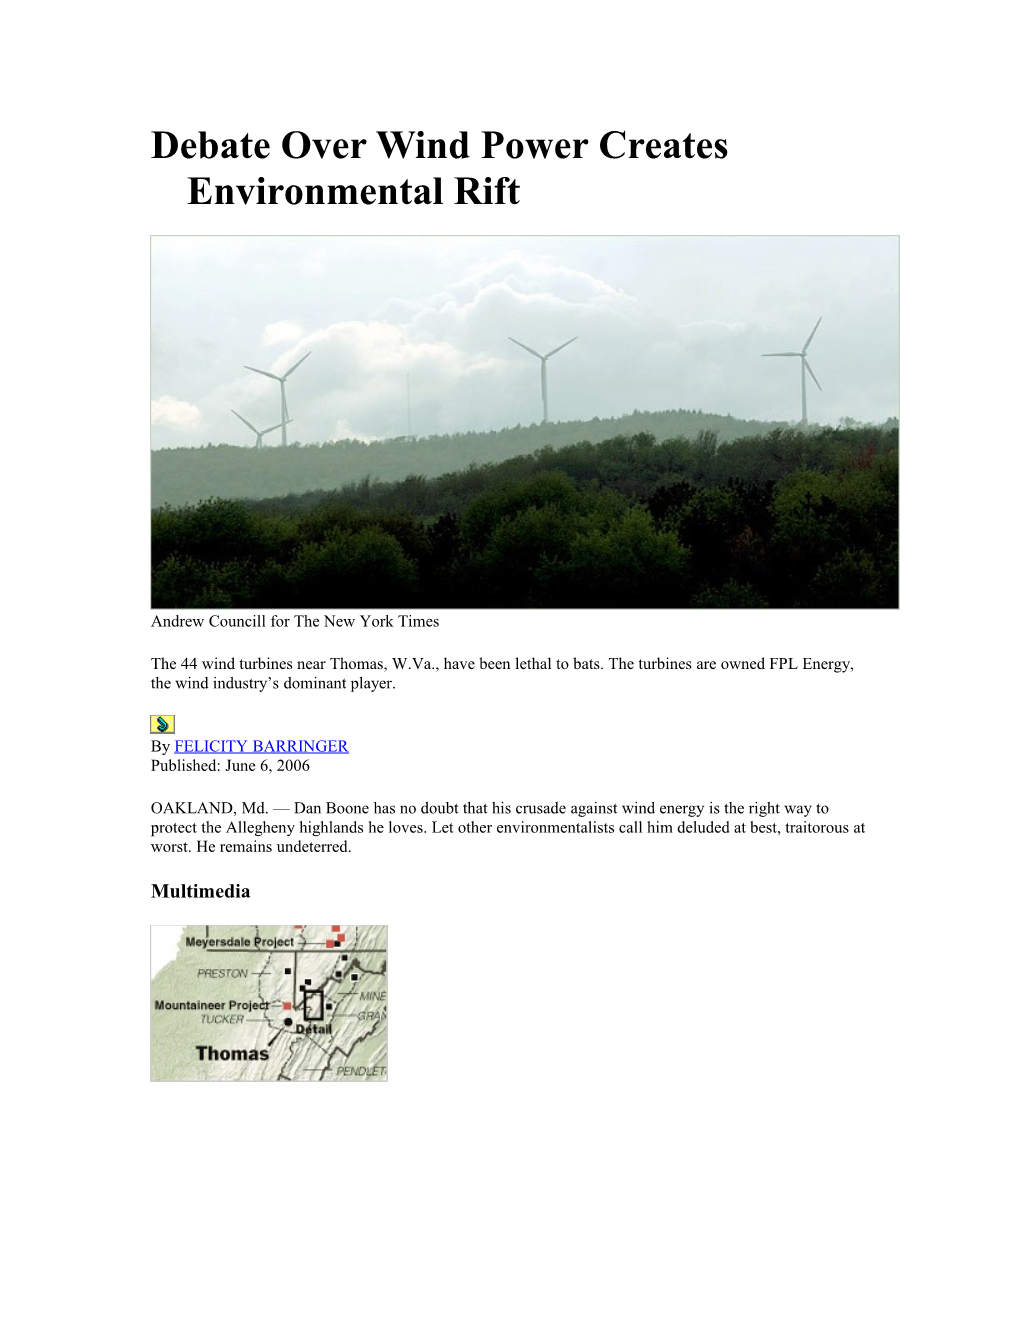 Debate Over Wind Power Creates Environmental Rift